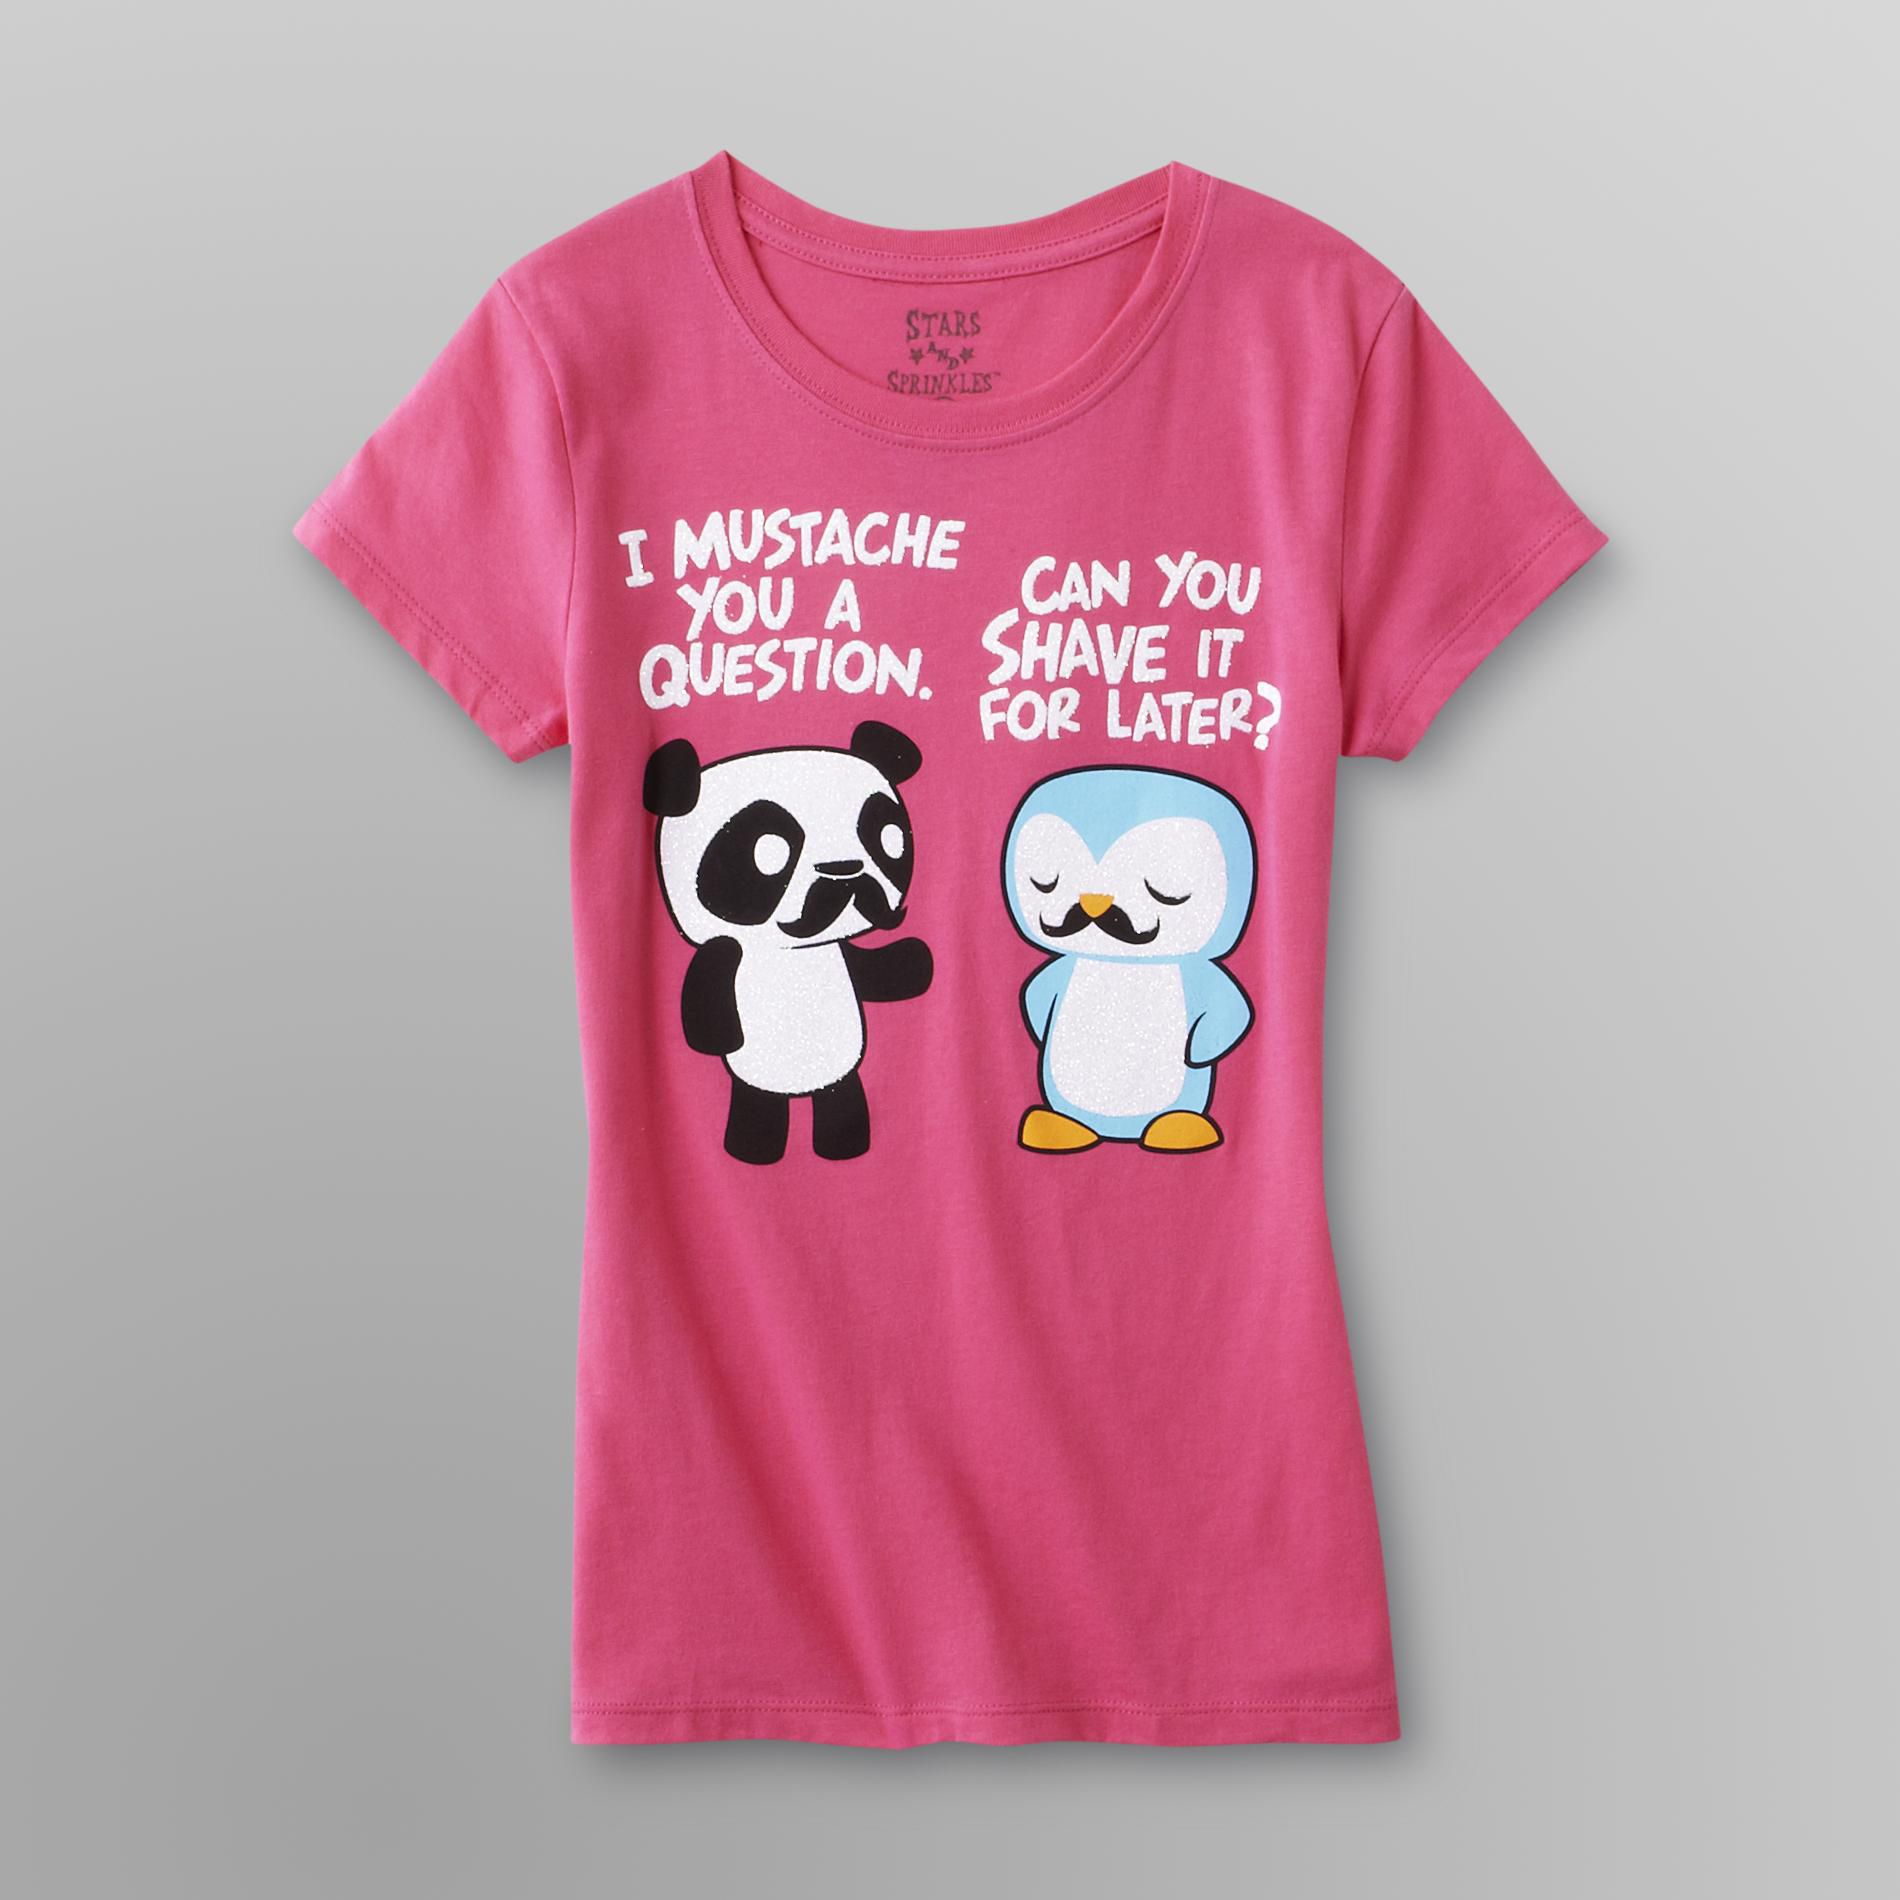 Stars & Sprinkels Girl's Graphic T-Shirt - Funny Animals